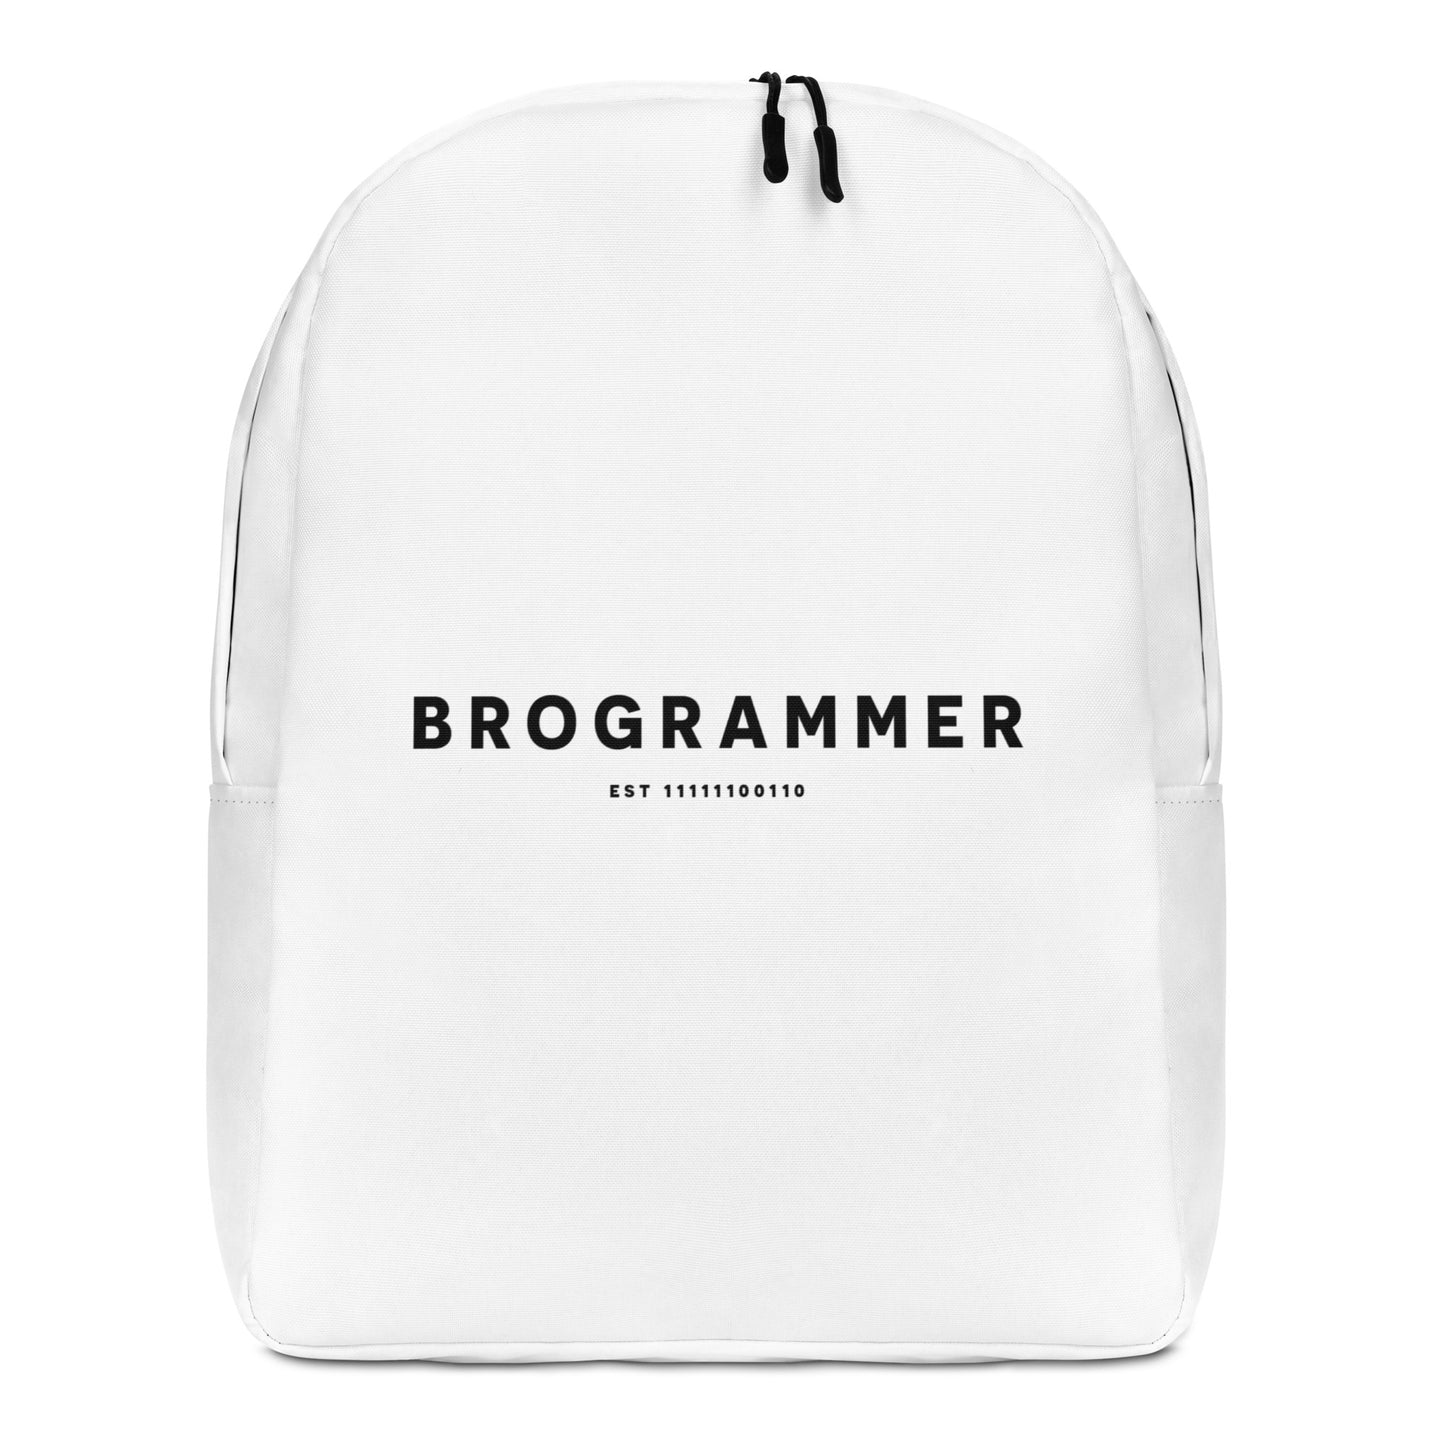 Brogrammer Backpack